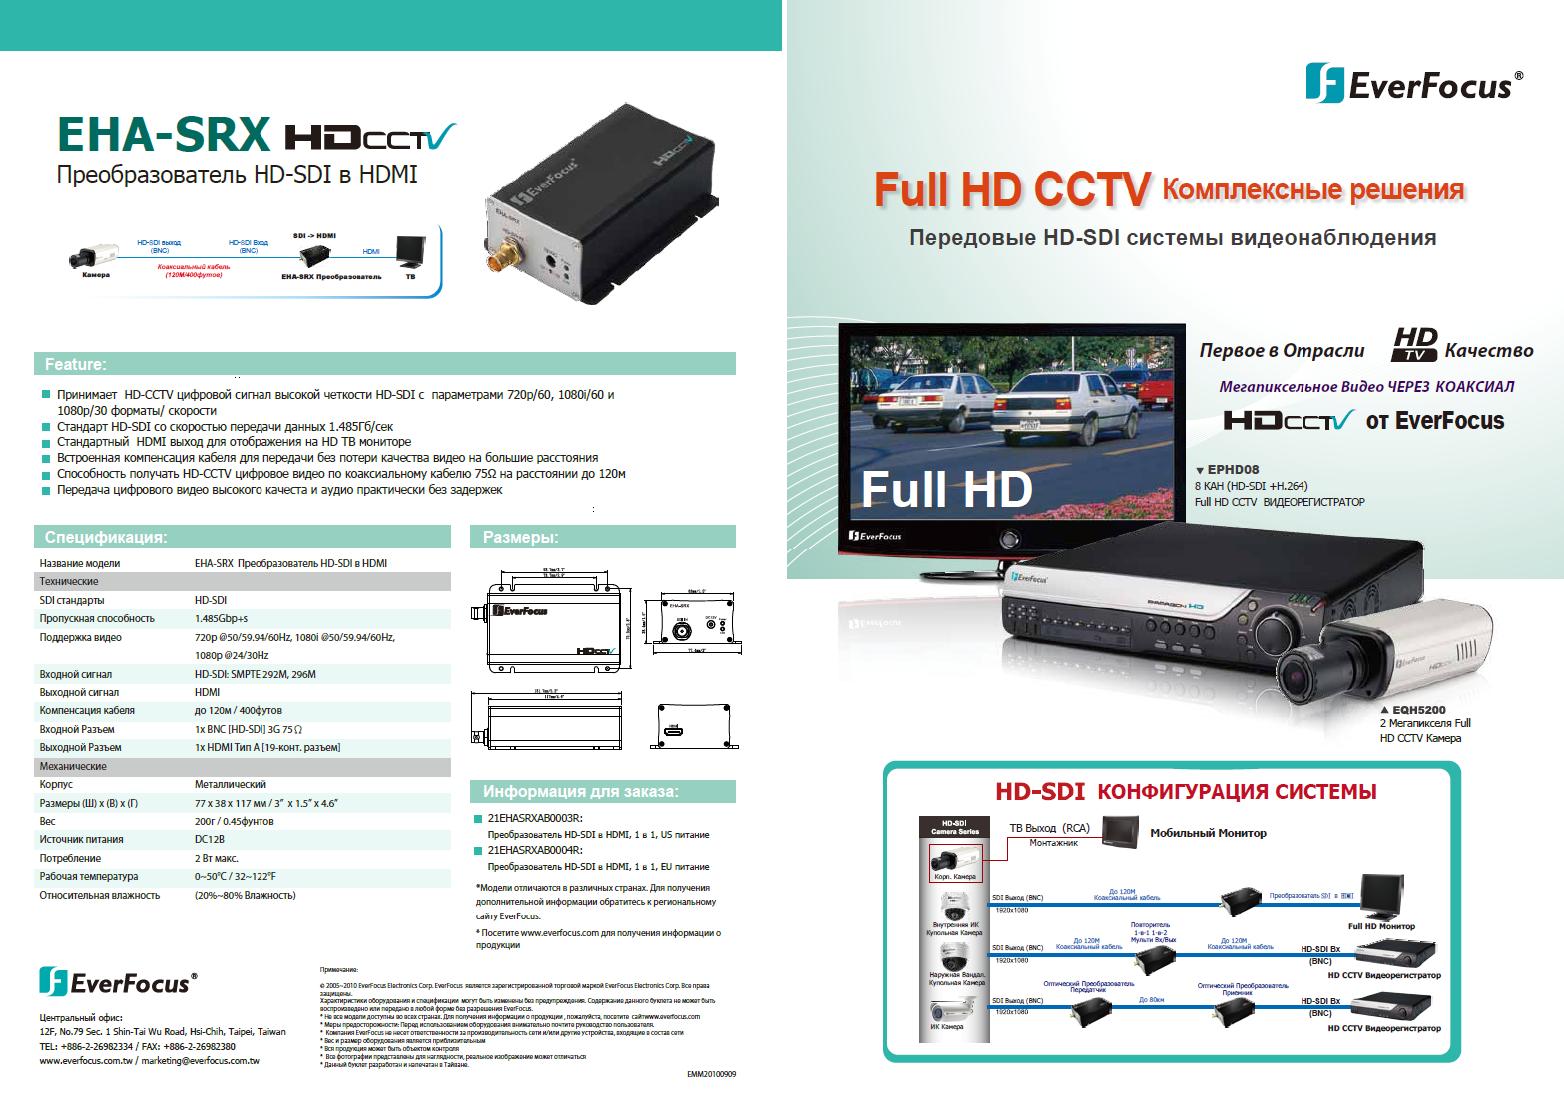 HD CCTV EverFocus